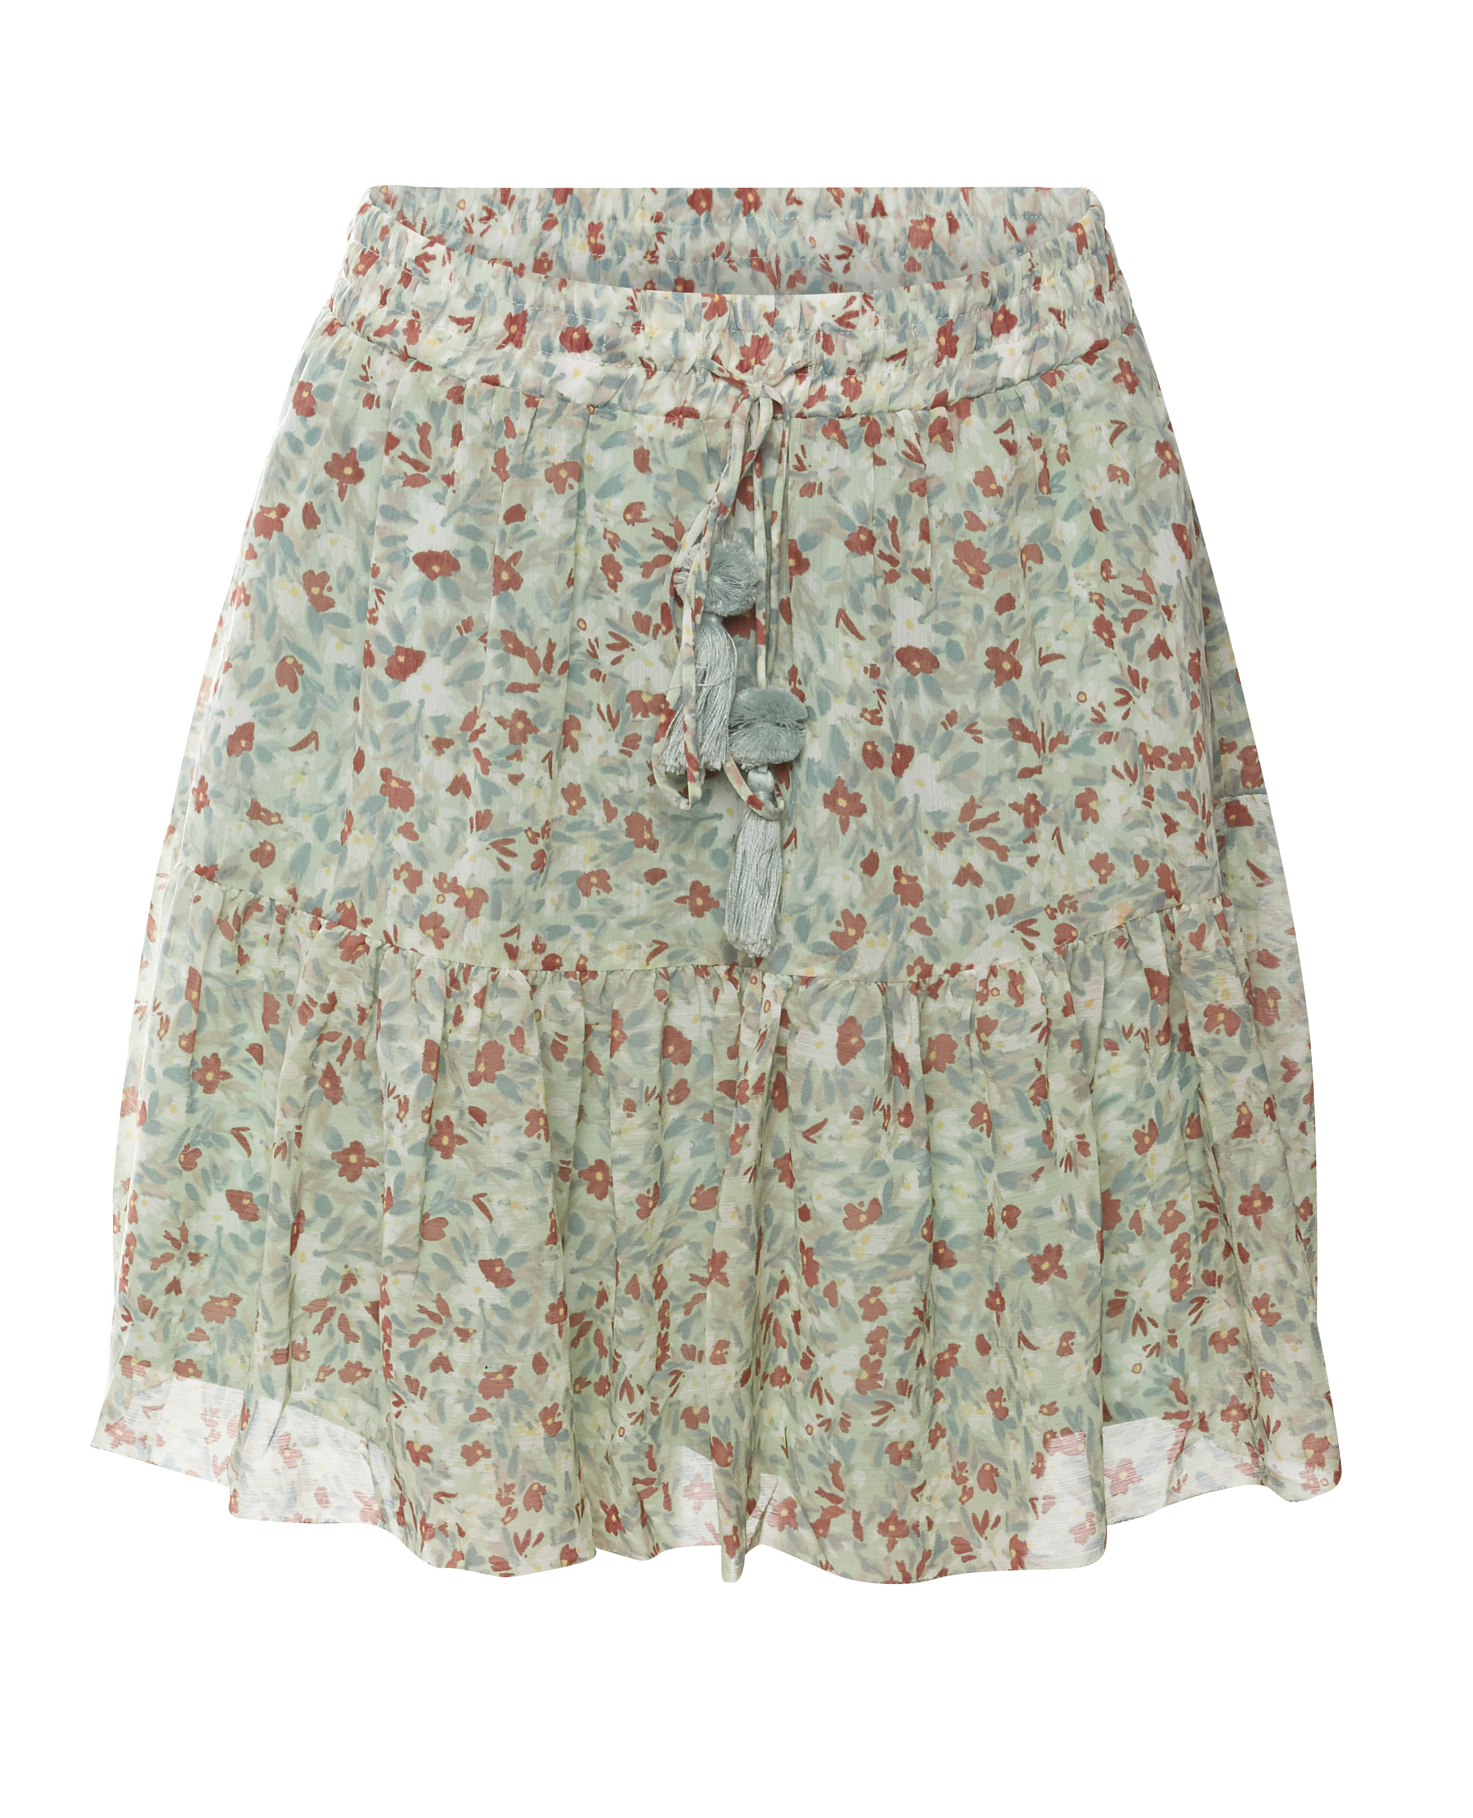 BB Dakota Floral Print Skirt